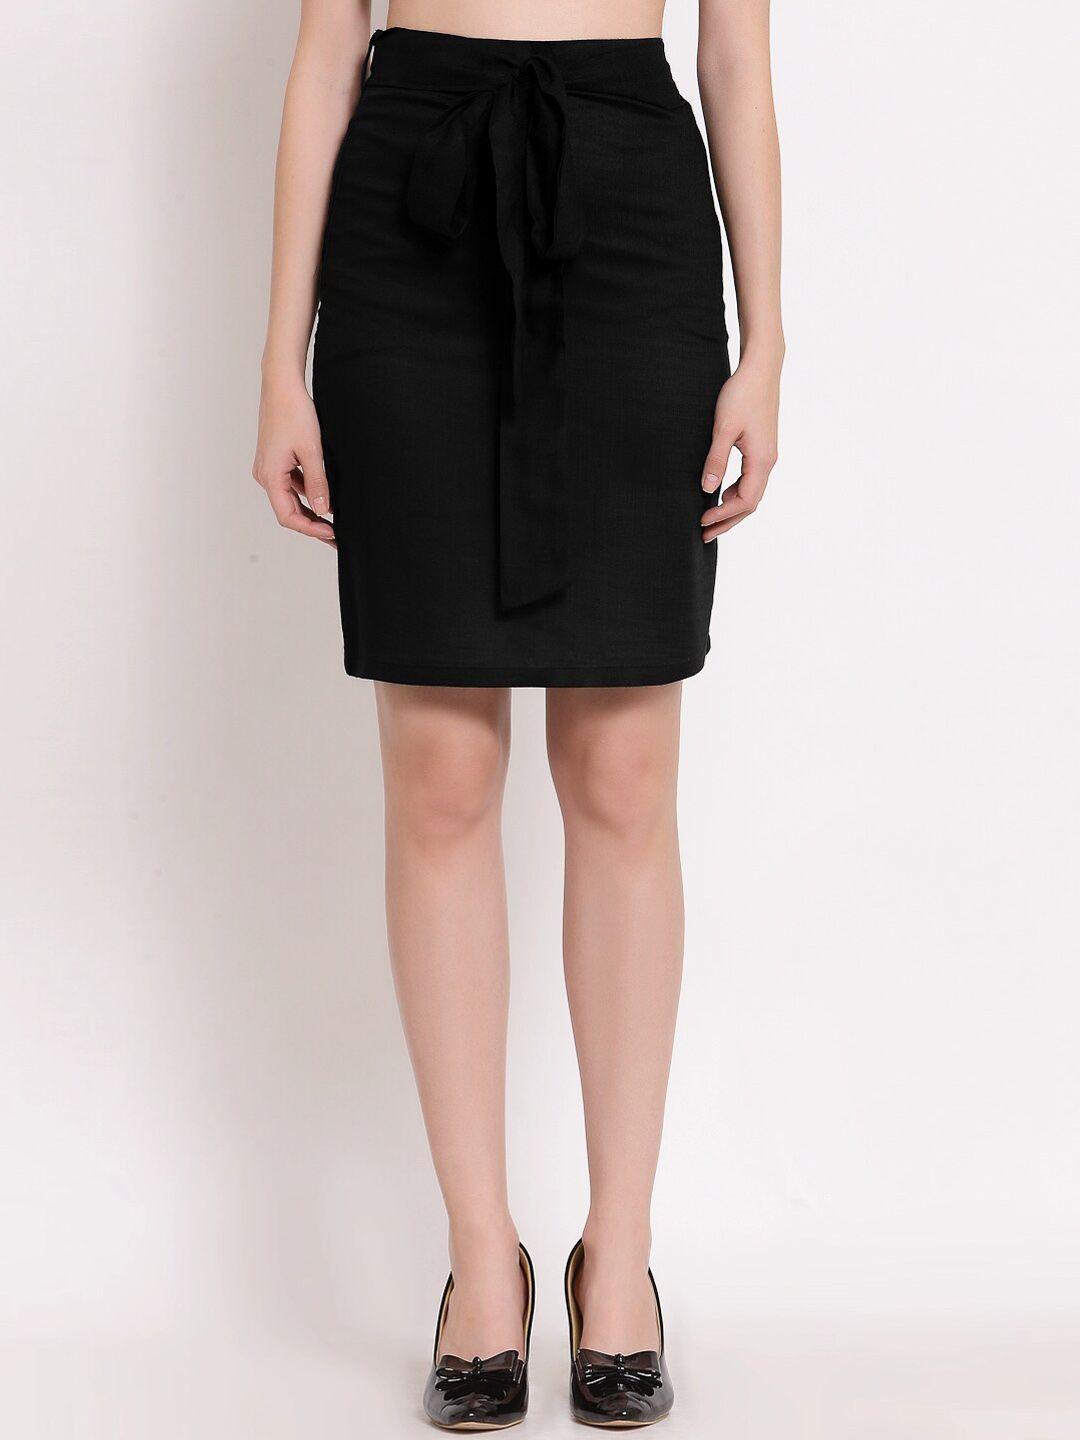 patrorna plus size women black solid pencil above knee-length skirt